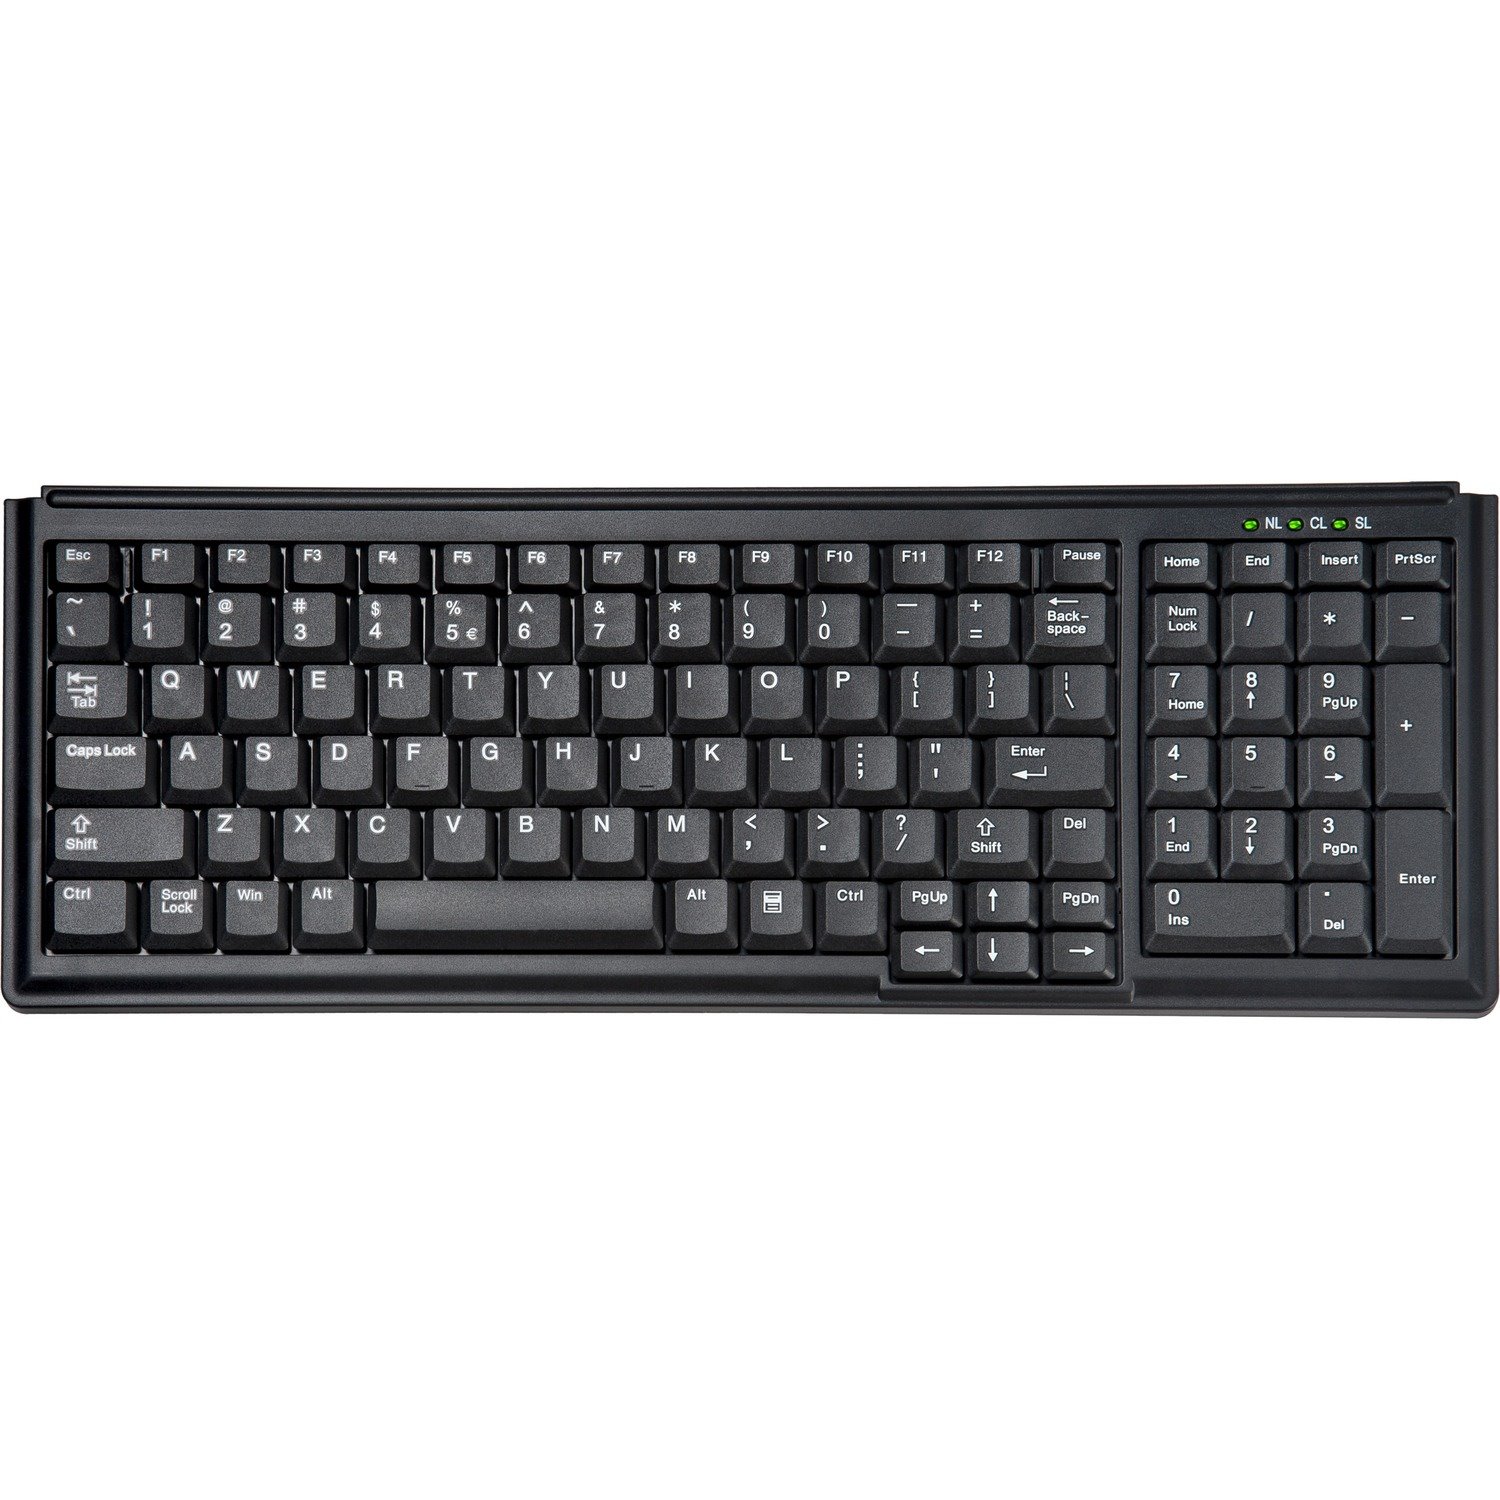 TG3 TG103 Keyboard